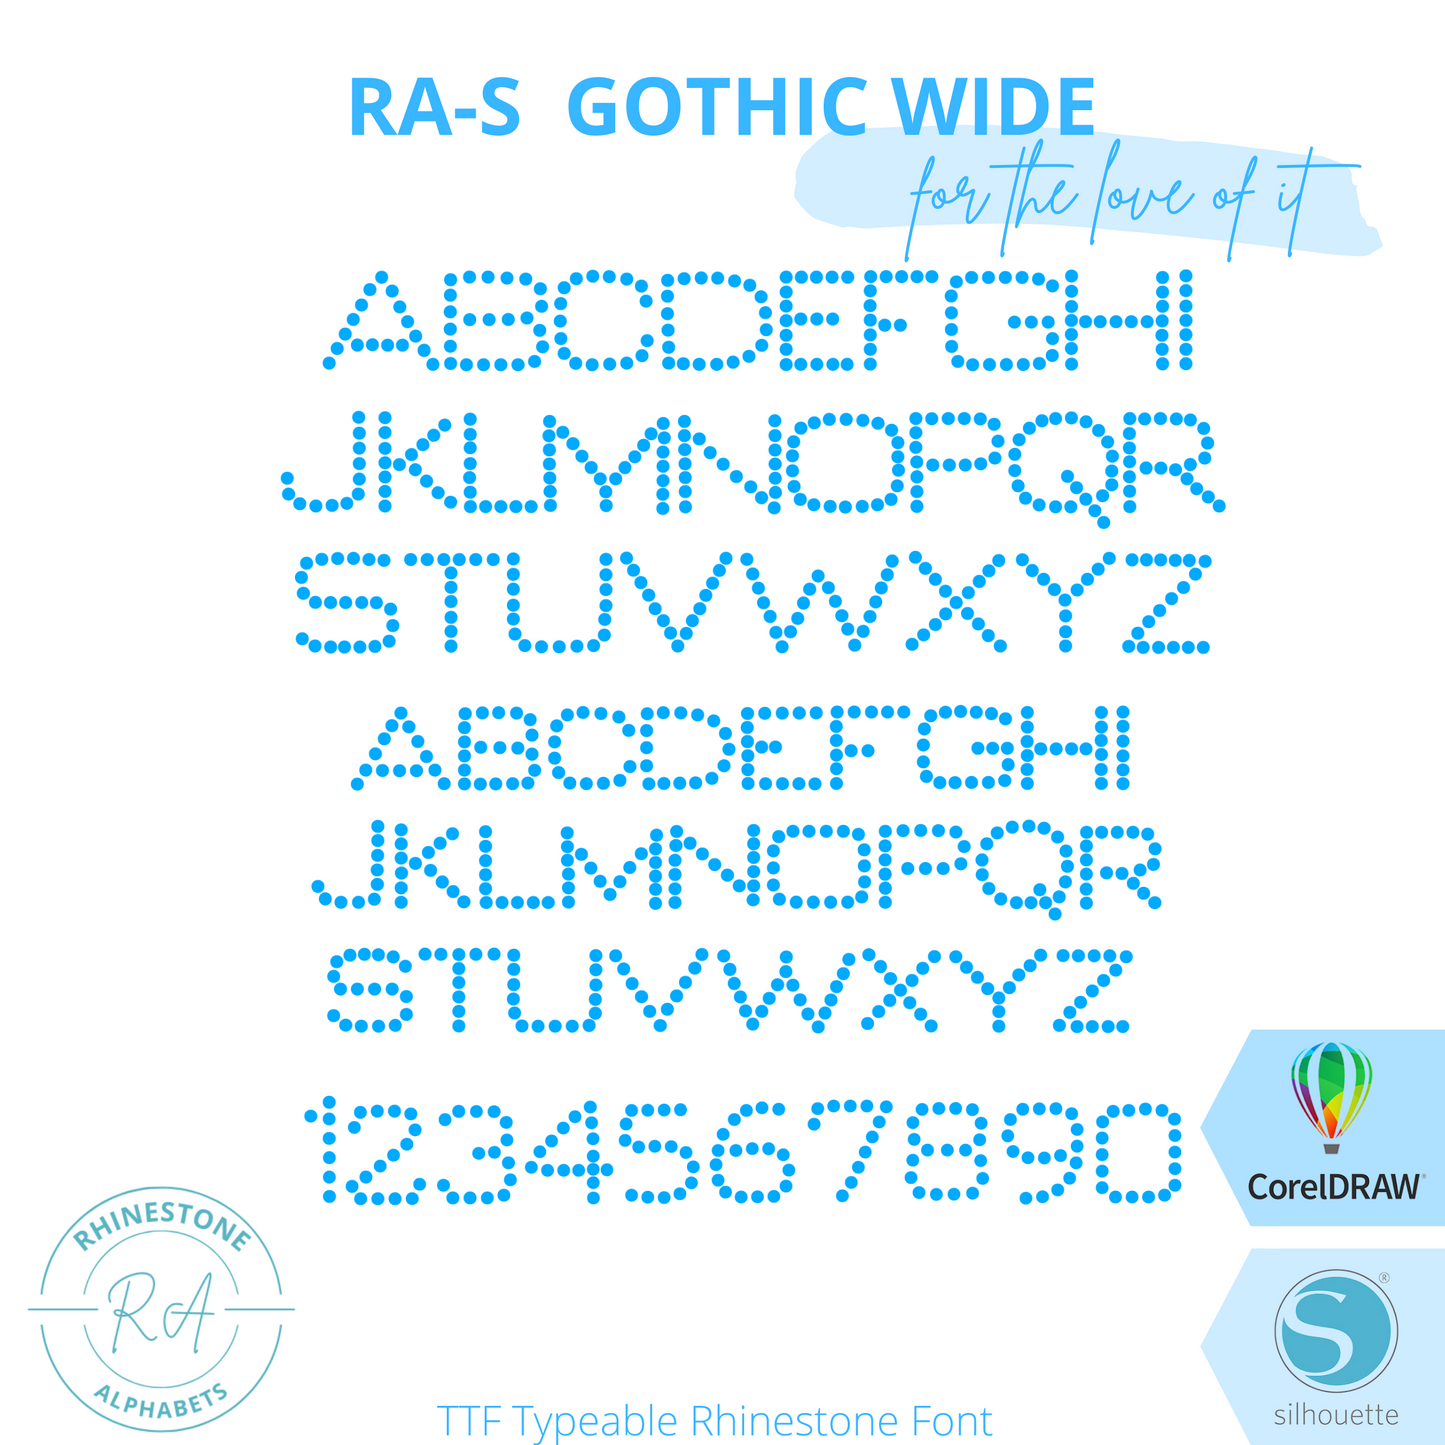 RA-S Gothic Wide - RhinestoneAlphabets